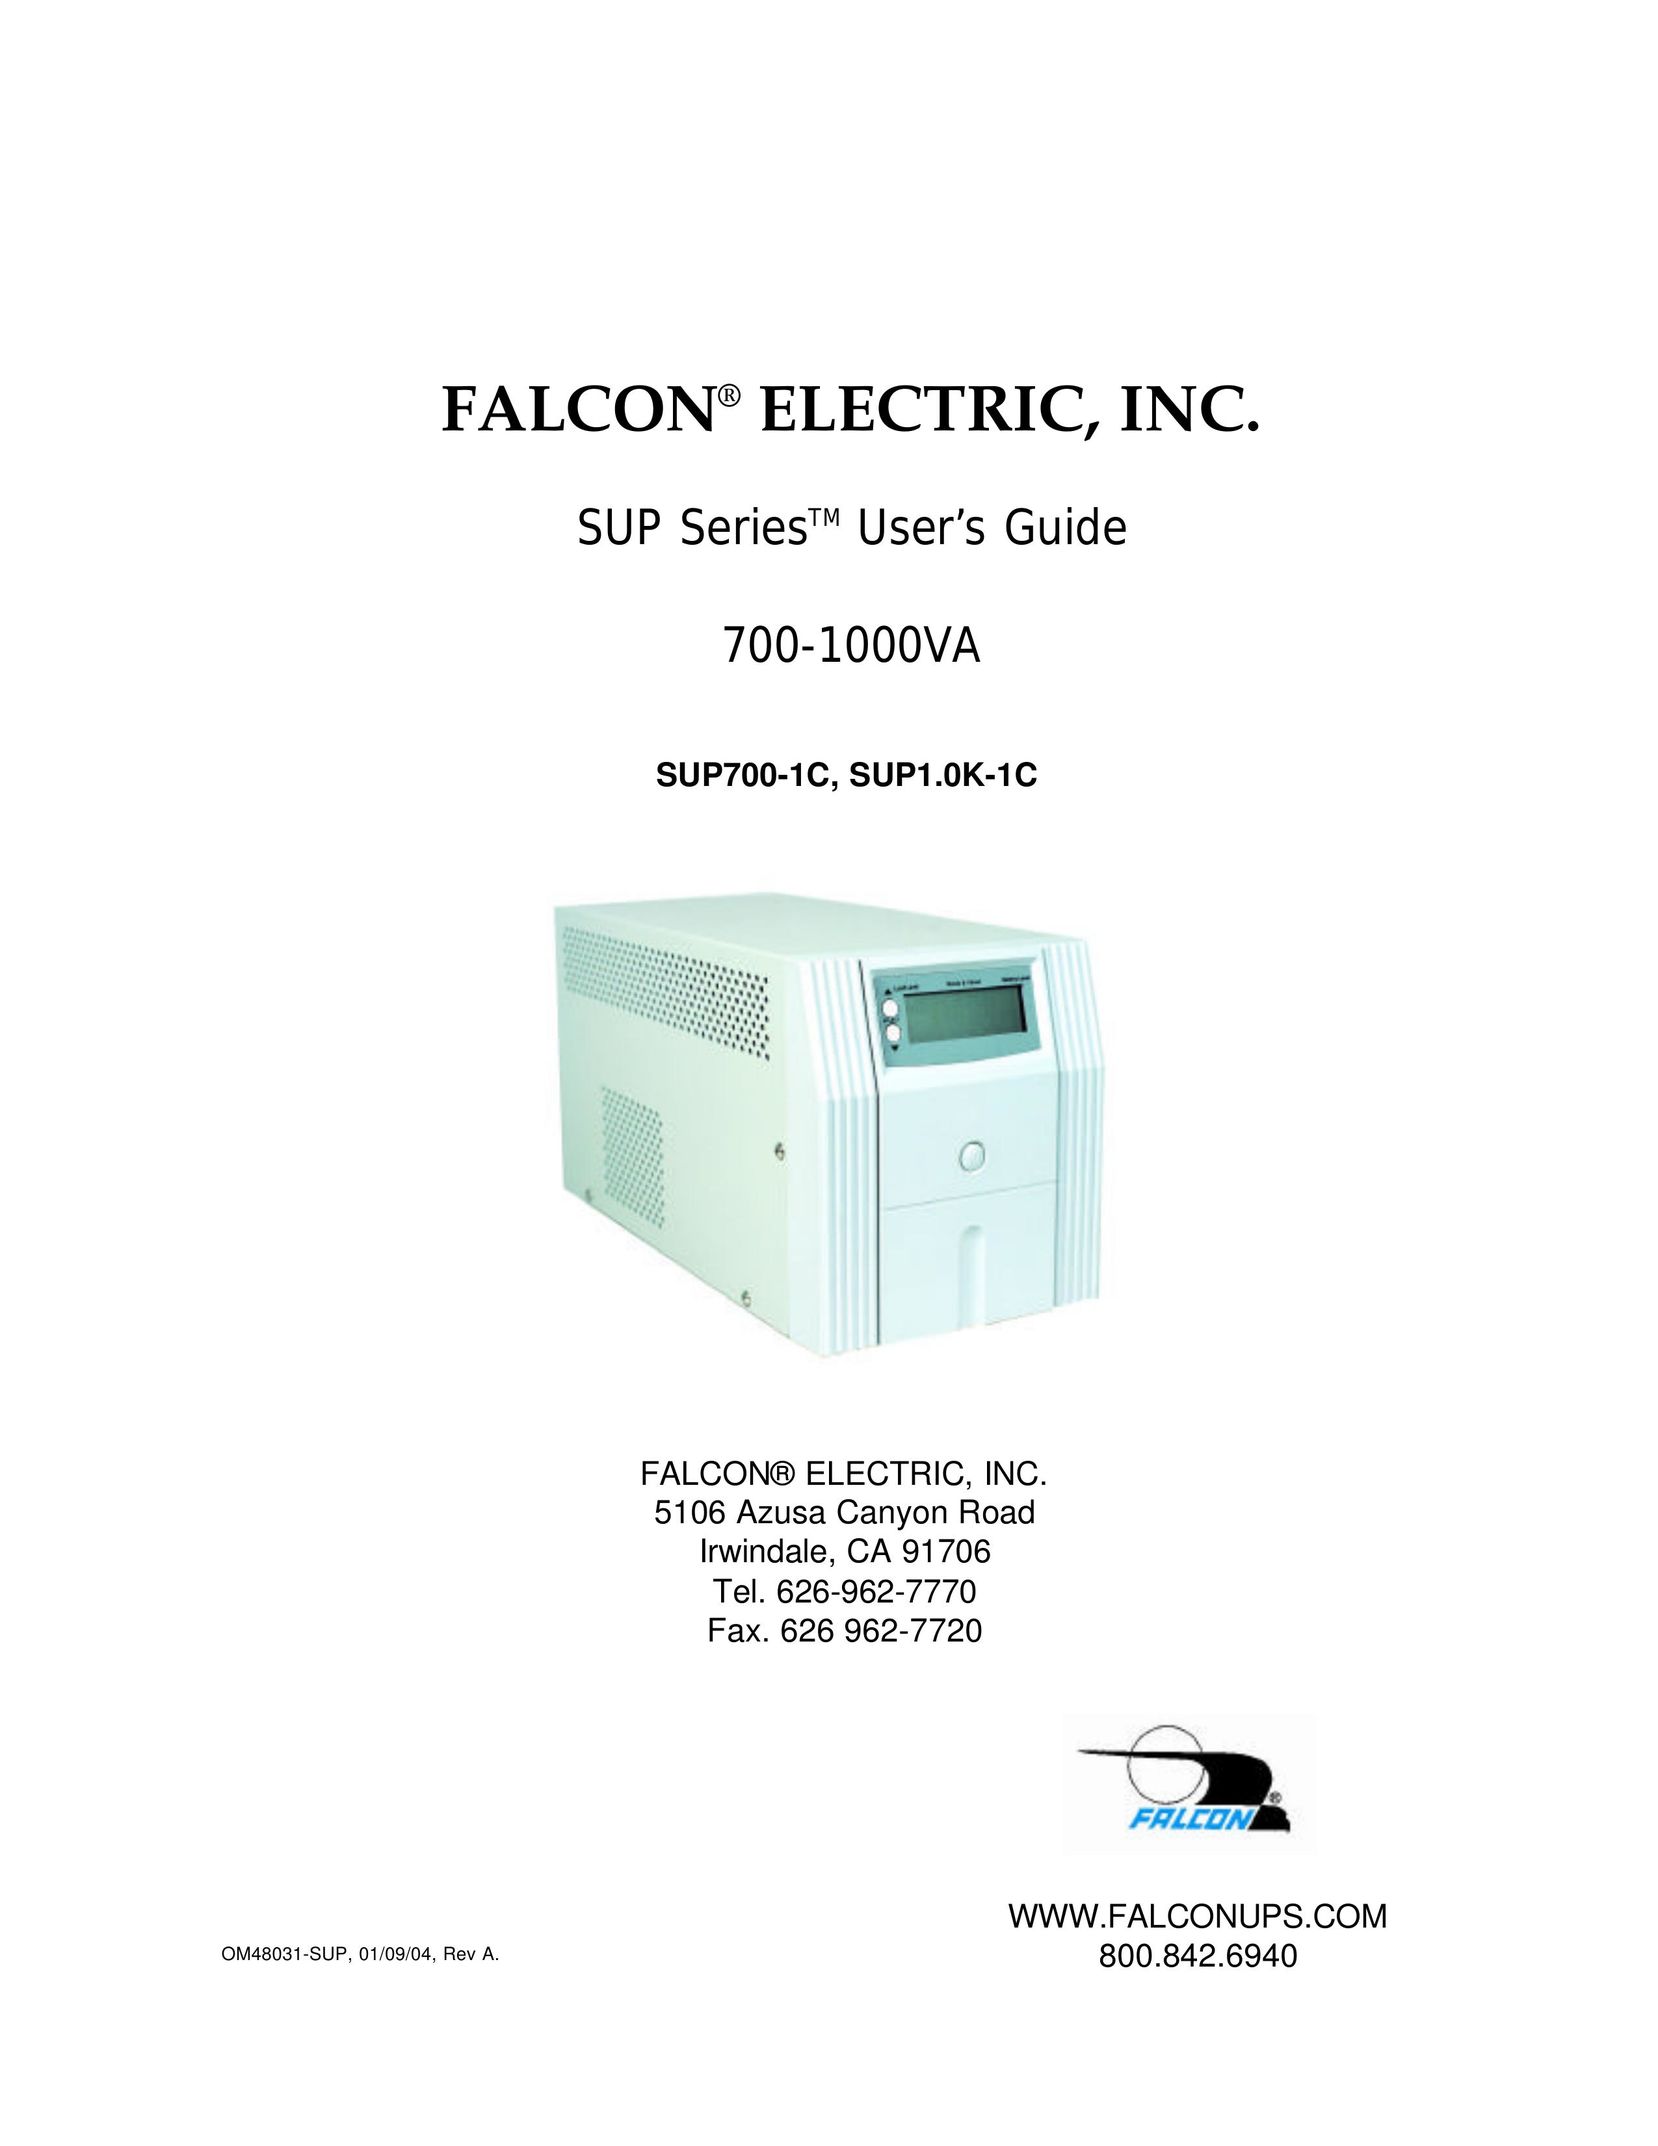 Falcon SUP1.0K-1C Power Supply User Manual